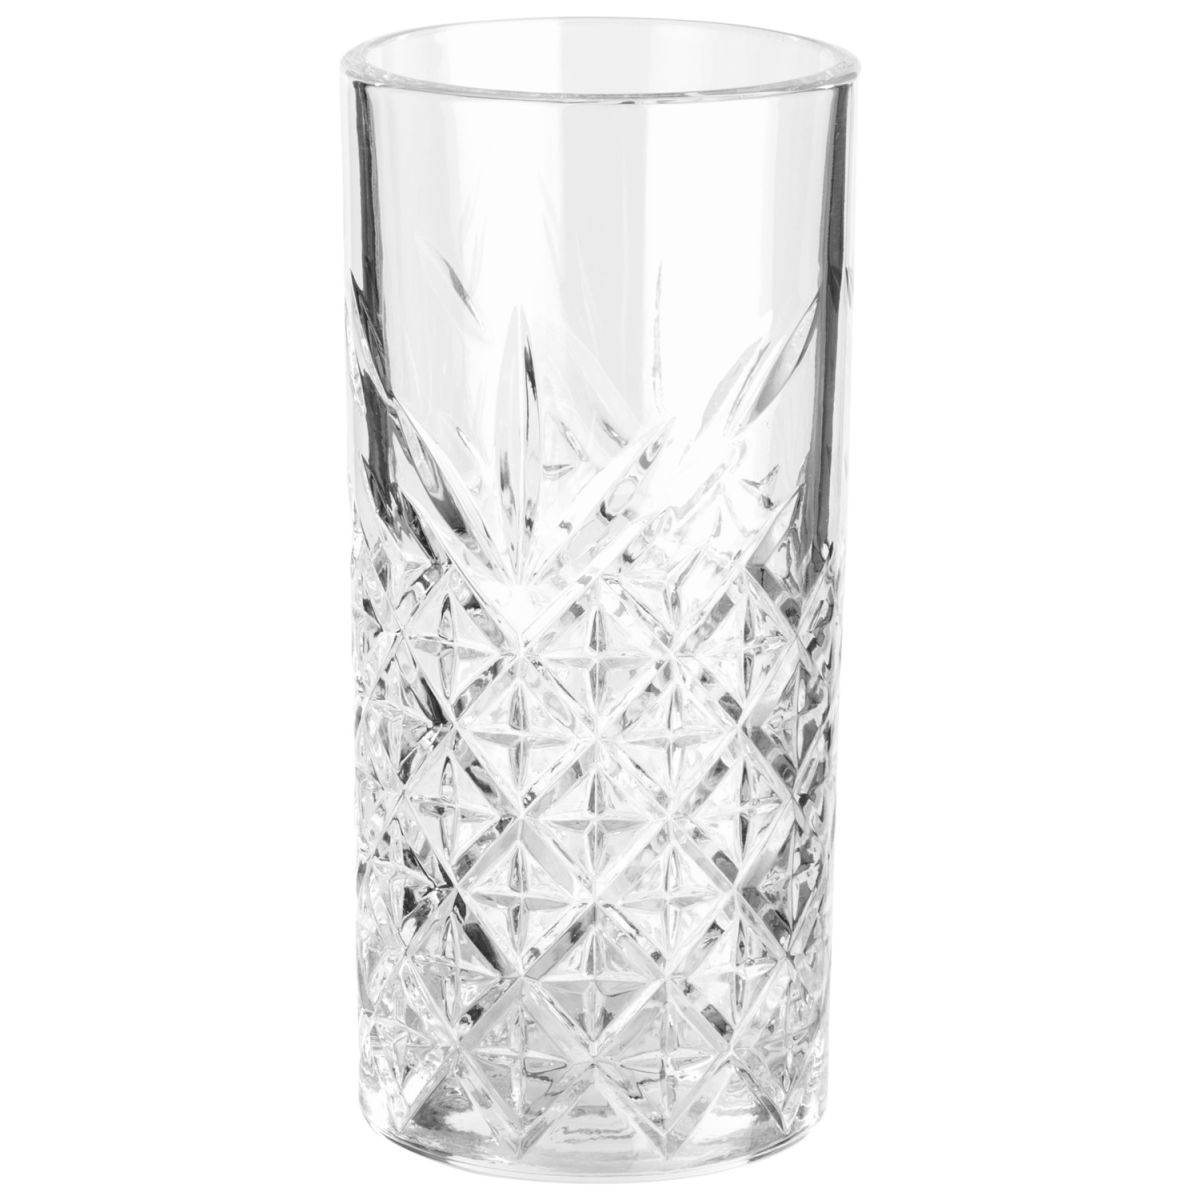 Pasabahçe Cocktailglas Timeless; 450ml, 7.8x16.1 cm (ØxH); transparant; 6 stuk / verpakking